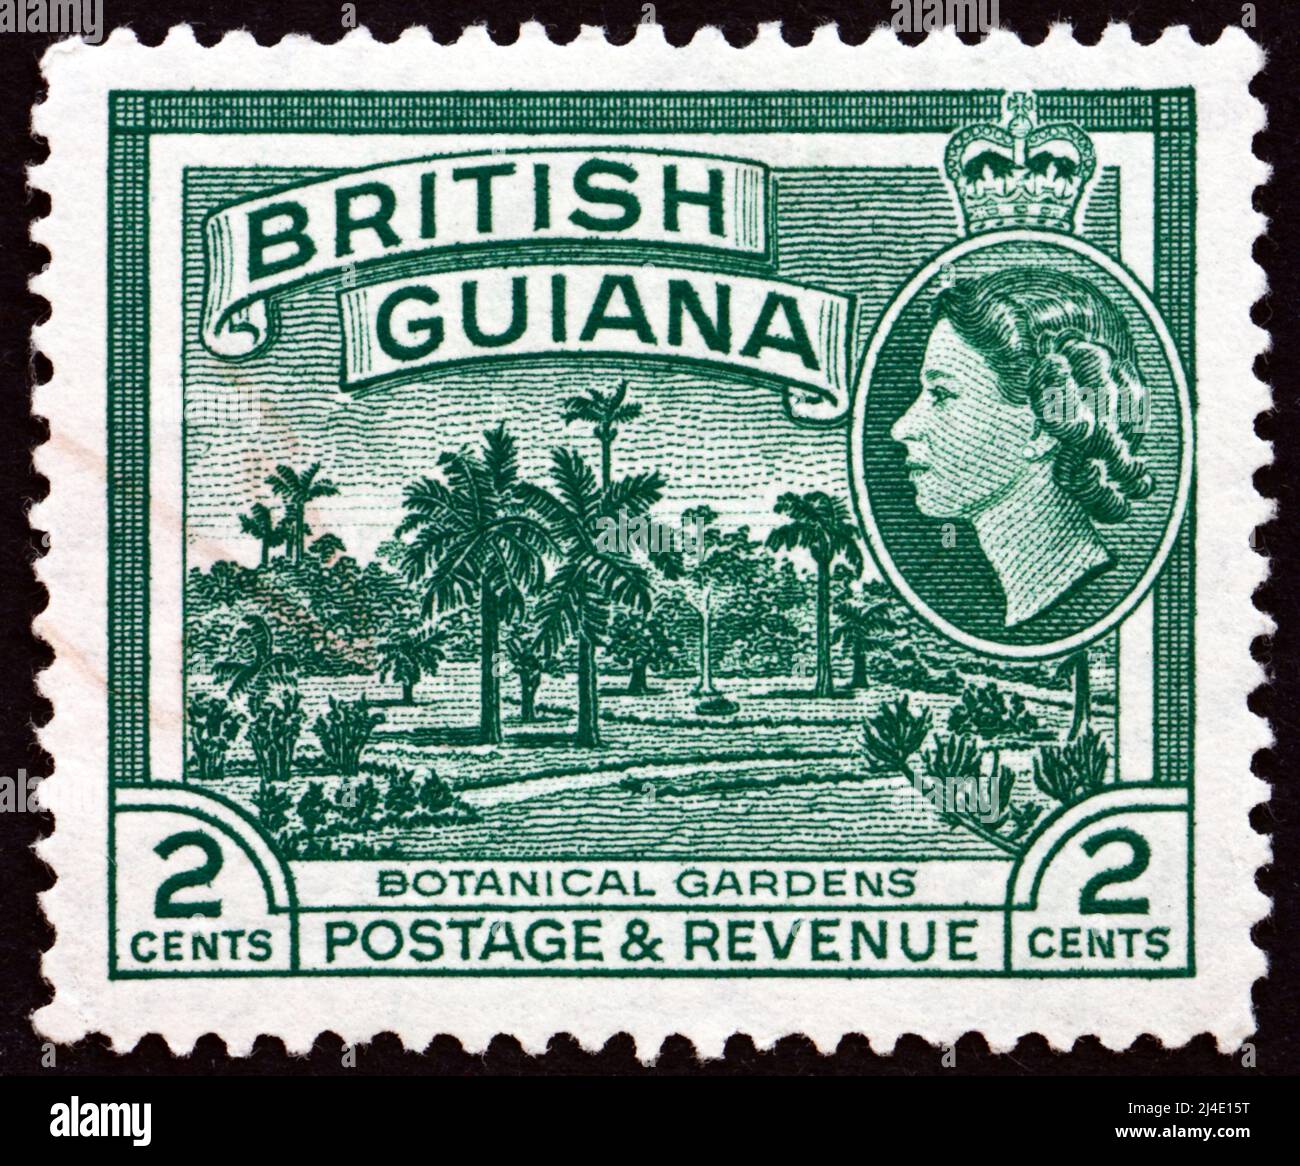 BRITISH GUIANA - CIRCA 1954: a stamp printed in British Guiana shows Botanical Gardens, Queen Elizabeth II, circa 1954 Stock Photo